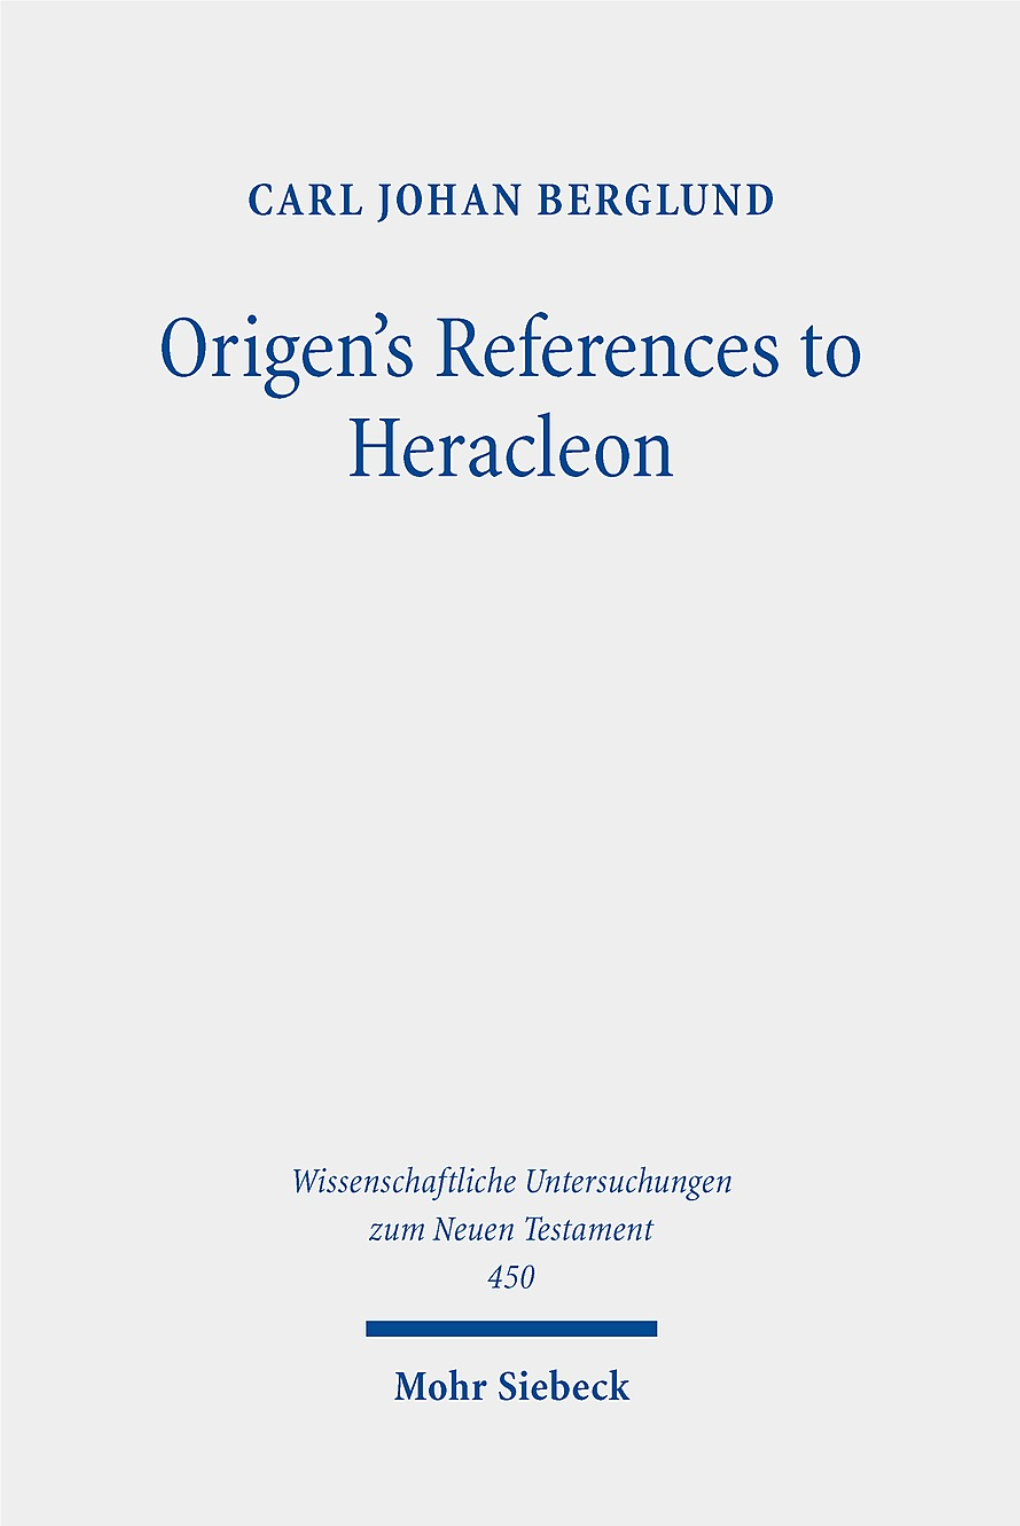 Origen's References to Heradon